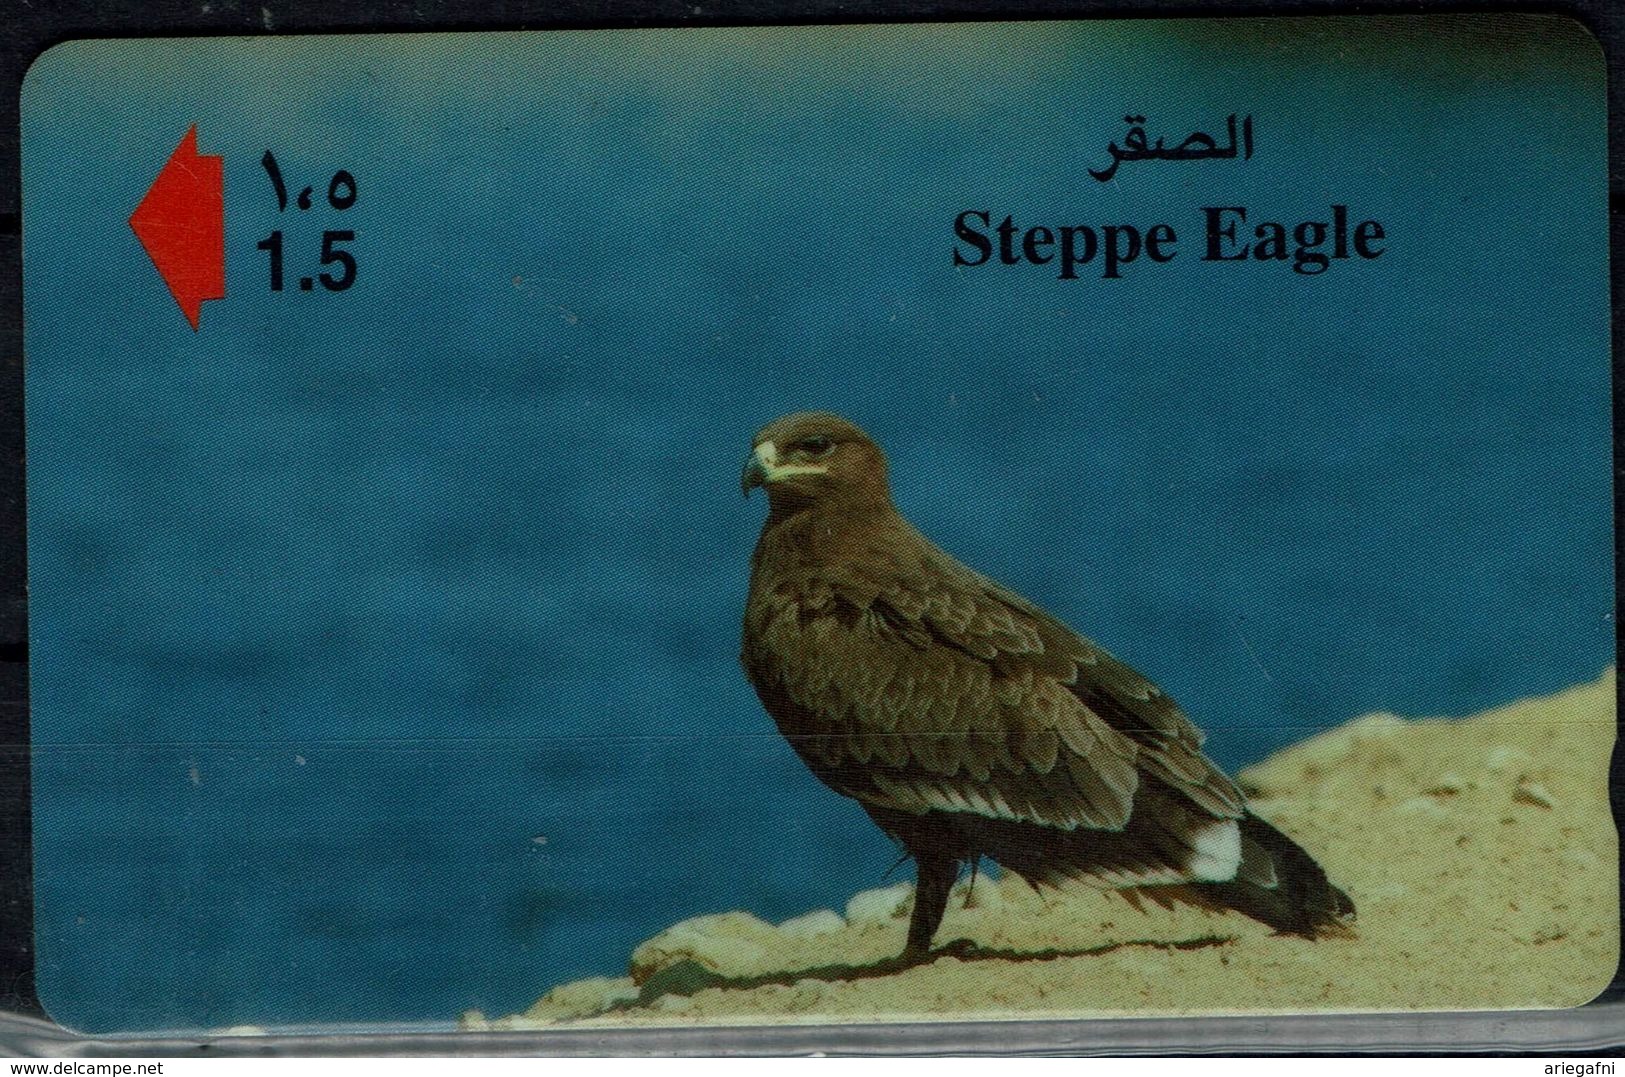 OMAN 2002 PHONECARD BIRDS EAGLES USED VF!! - Arenden & Roofvogels